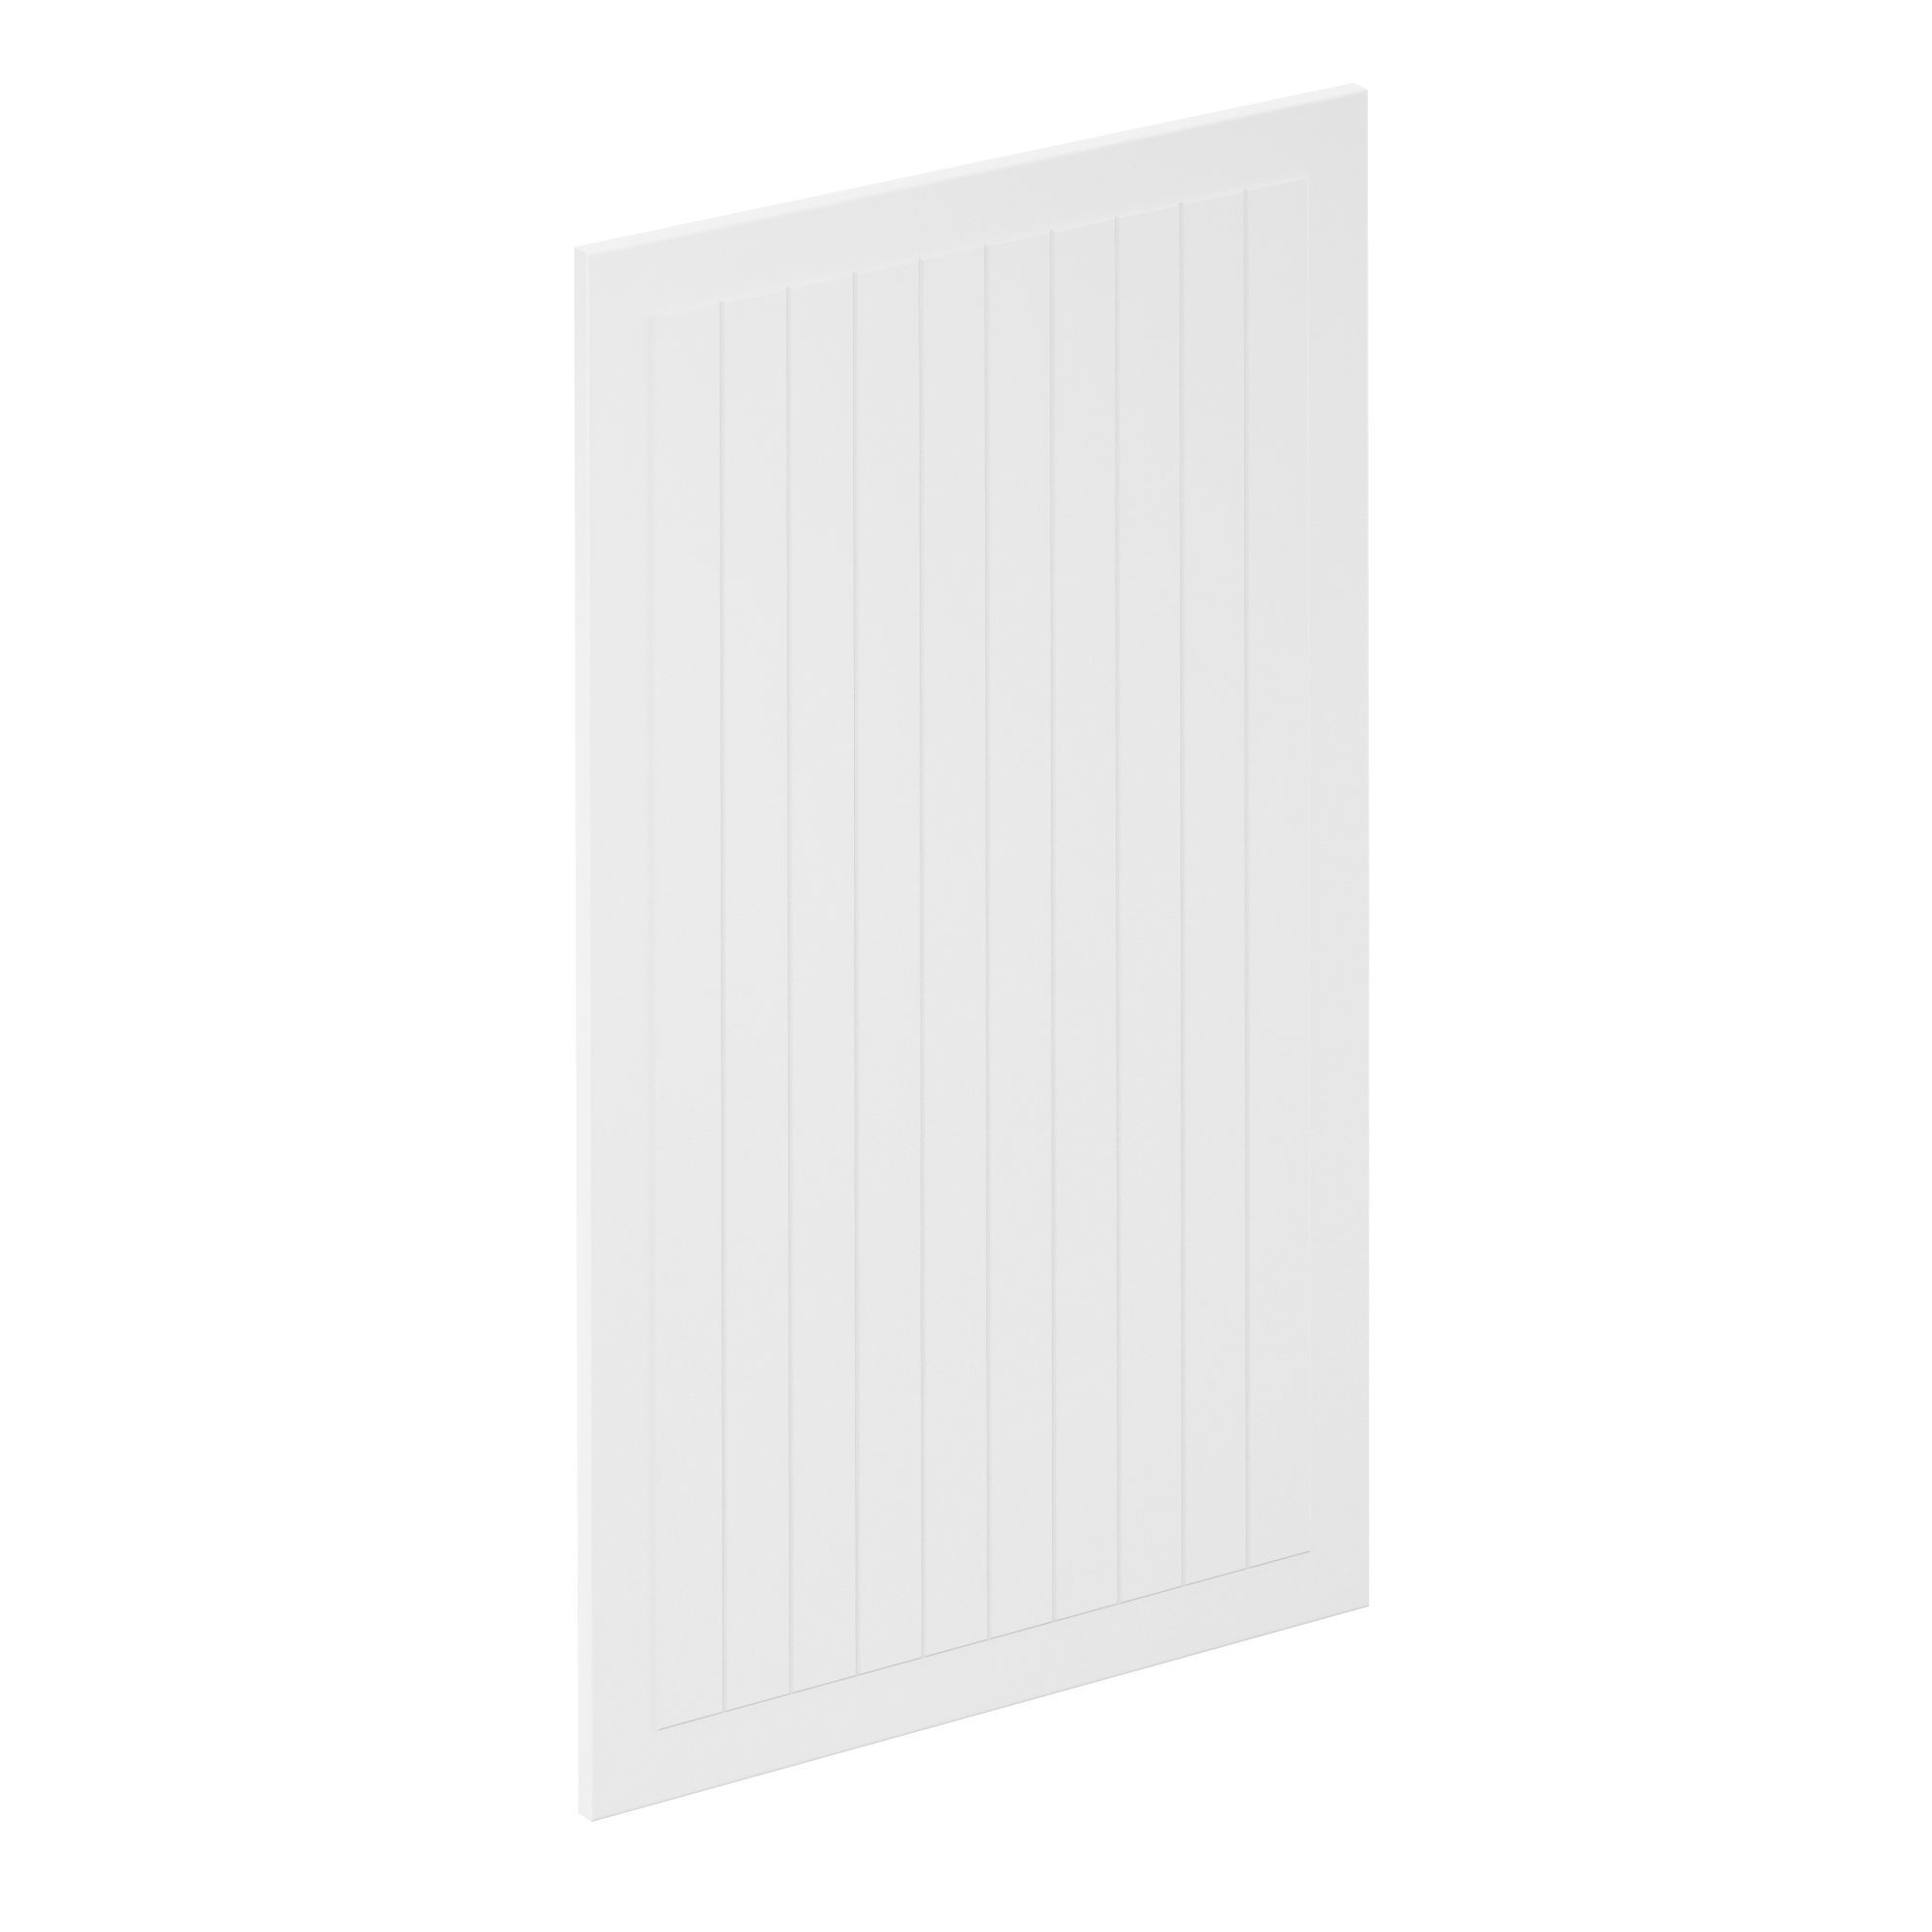 Puerta para mueble de cocina toscane blanco mate h 102.4 x l 60 cm